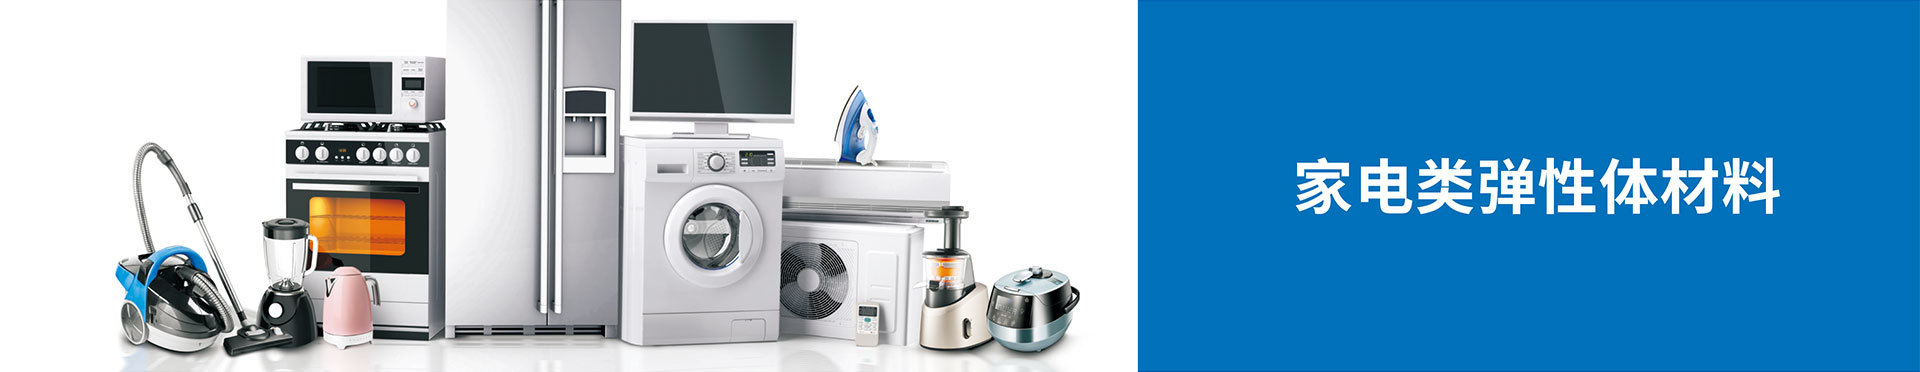 Elastomer materials for home appliances